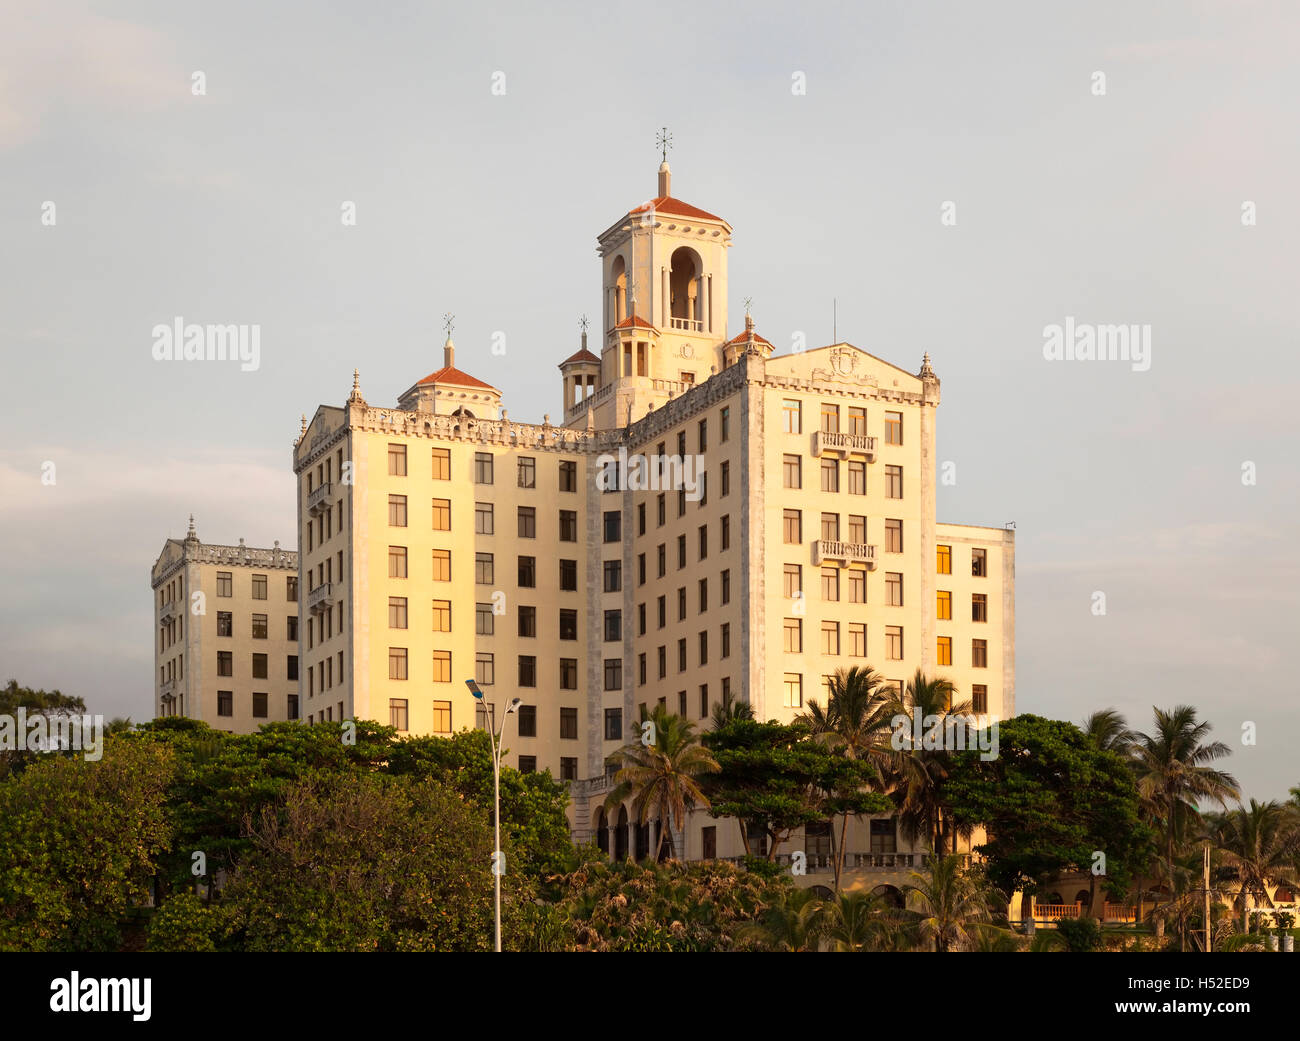 L'Hotel Nacional de Cuba sulla sommità della collina Taganana lungo il Malecón (Avenida de Maceo) nel Vedado, Havana, Cuba. Foto Stock